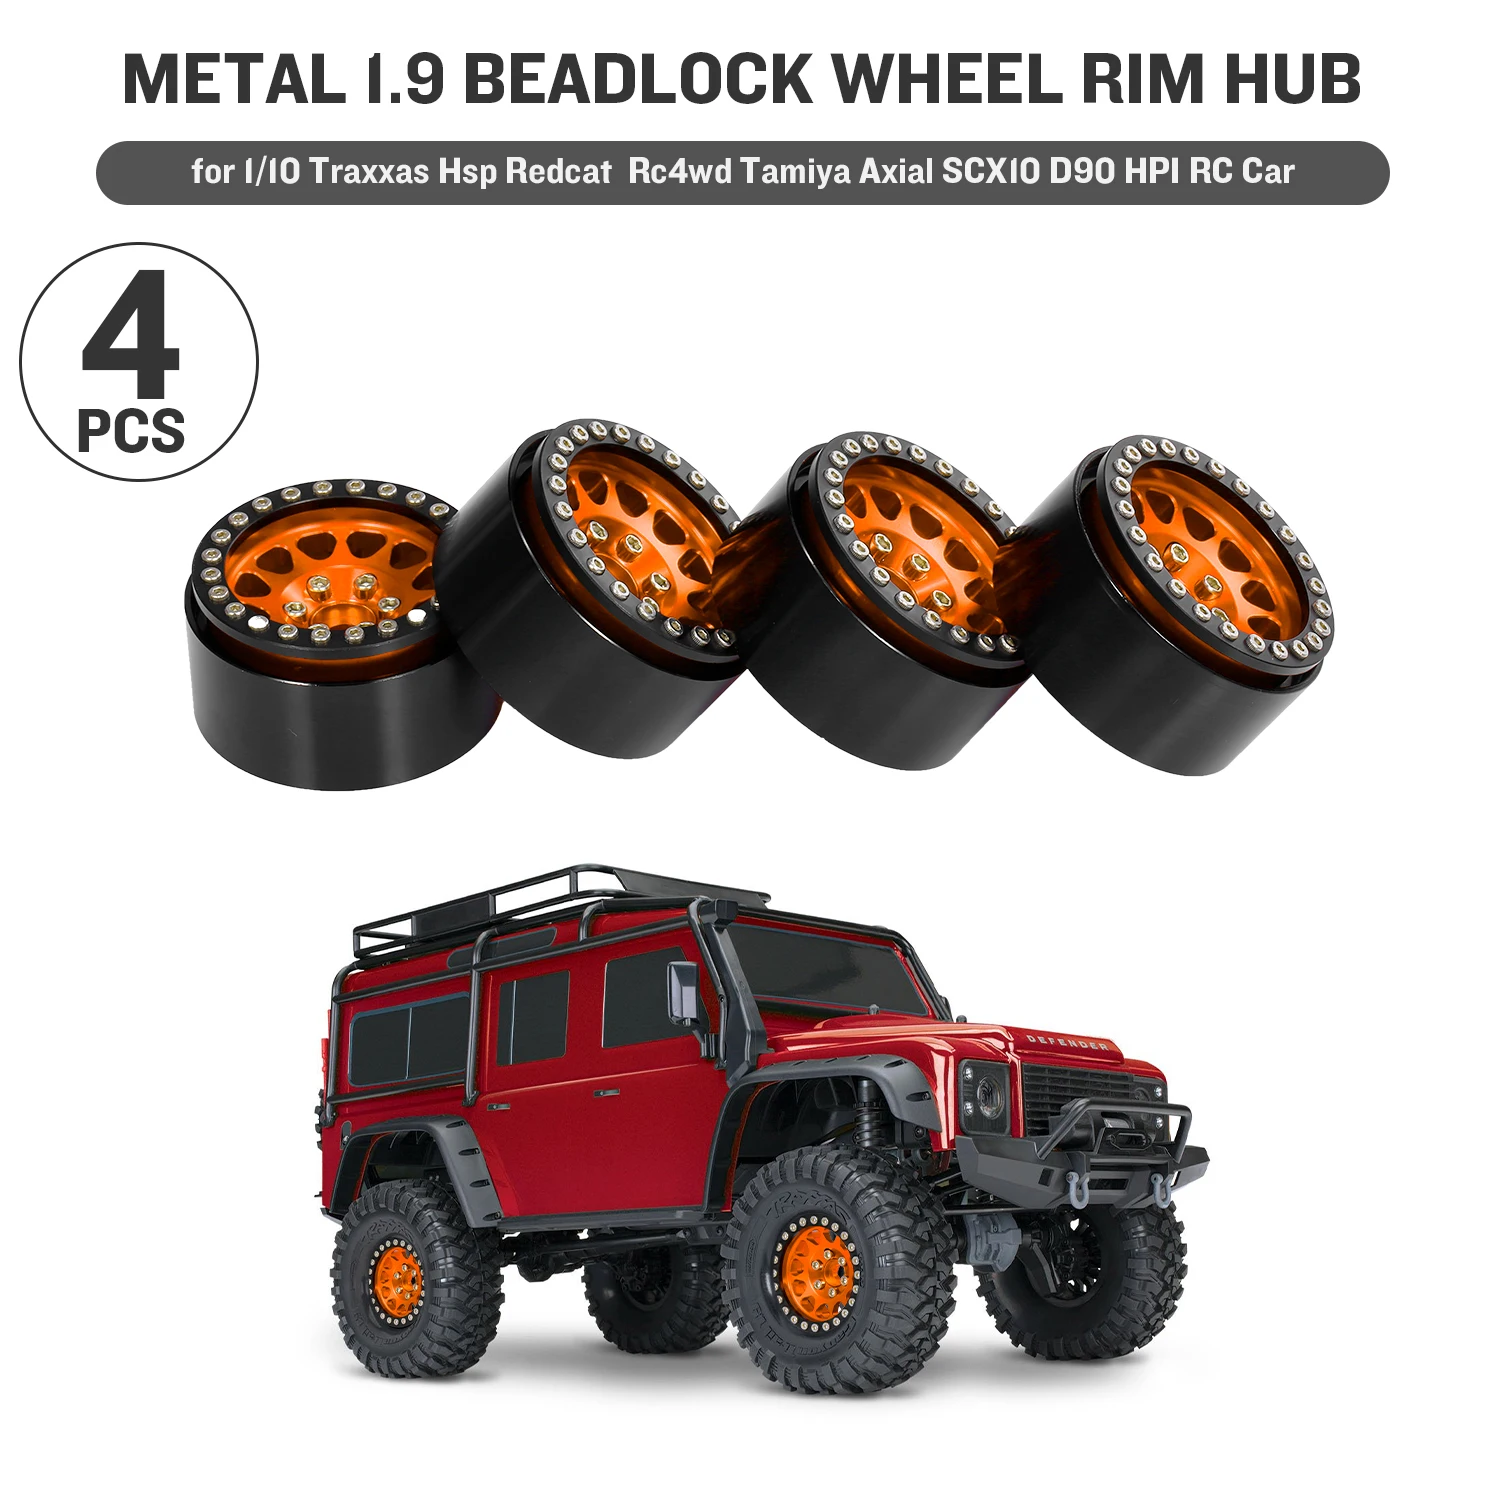 4PCS Metal 1.9 Beadlock Wheel Rim Hub for 1/10 Traxxas Hsp Redcat Rc4wd Tamiya Axial SCX10 D90 HPI RC Car Goolsky